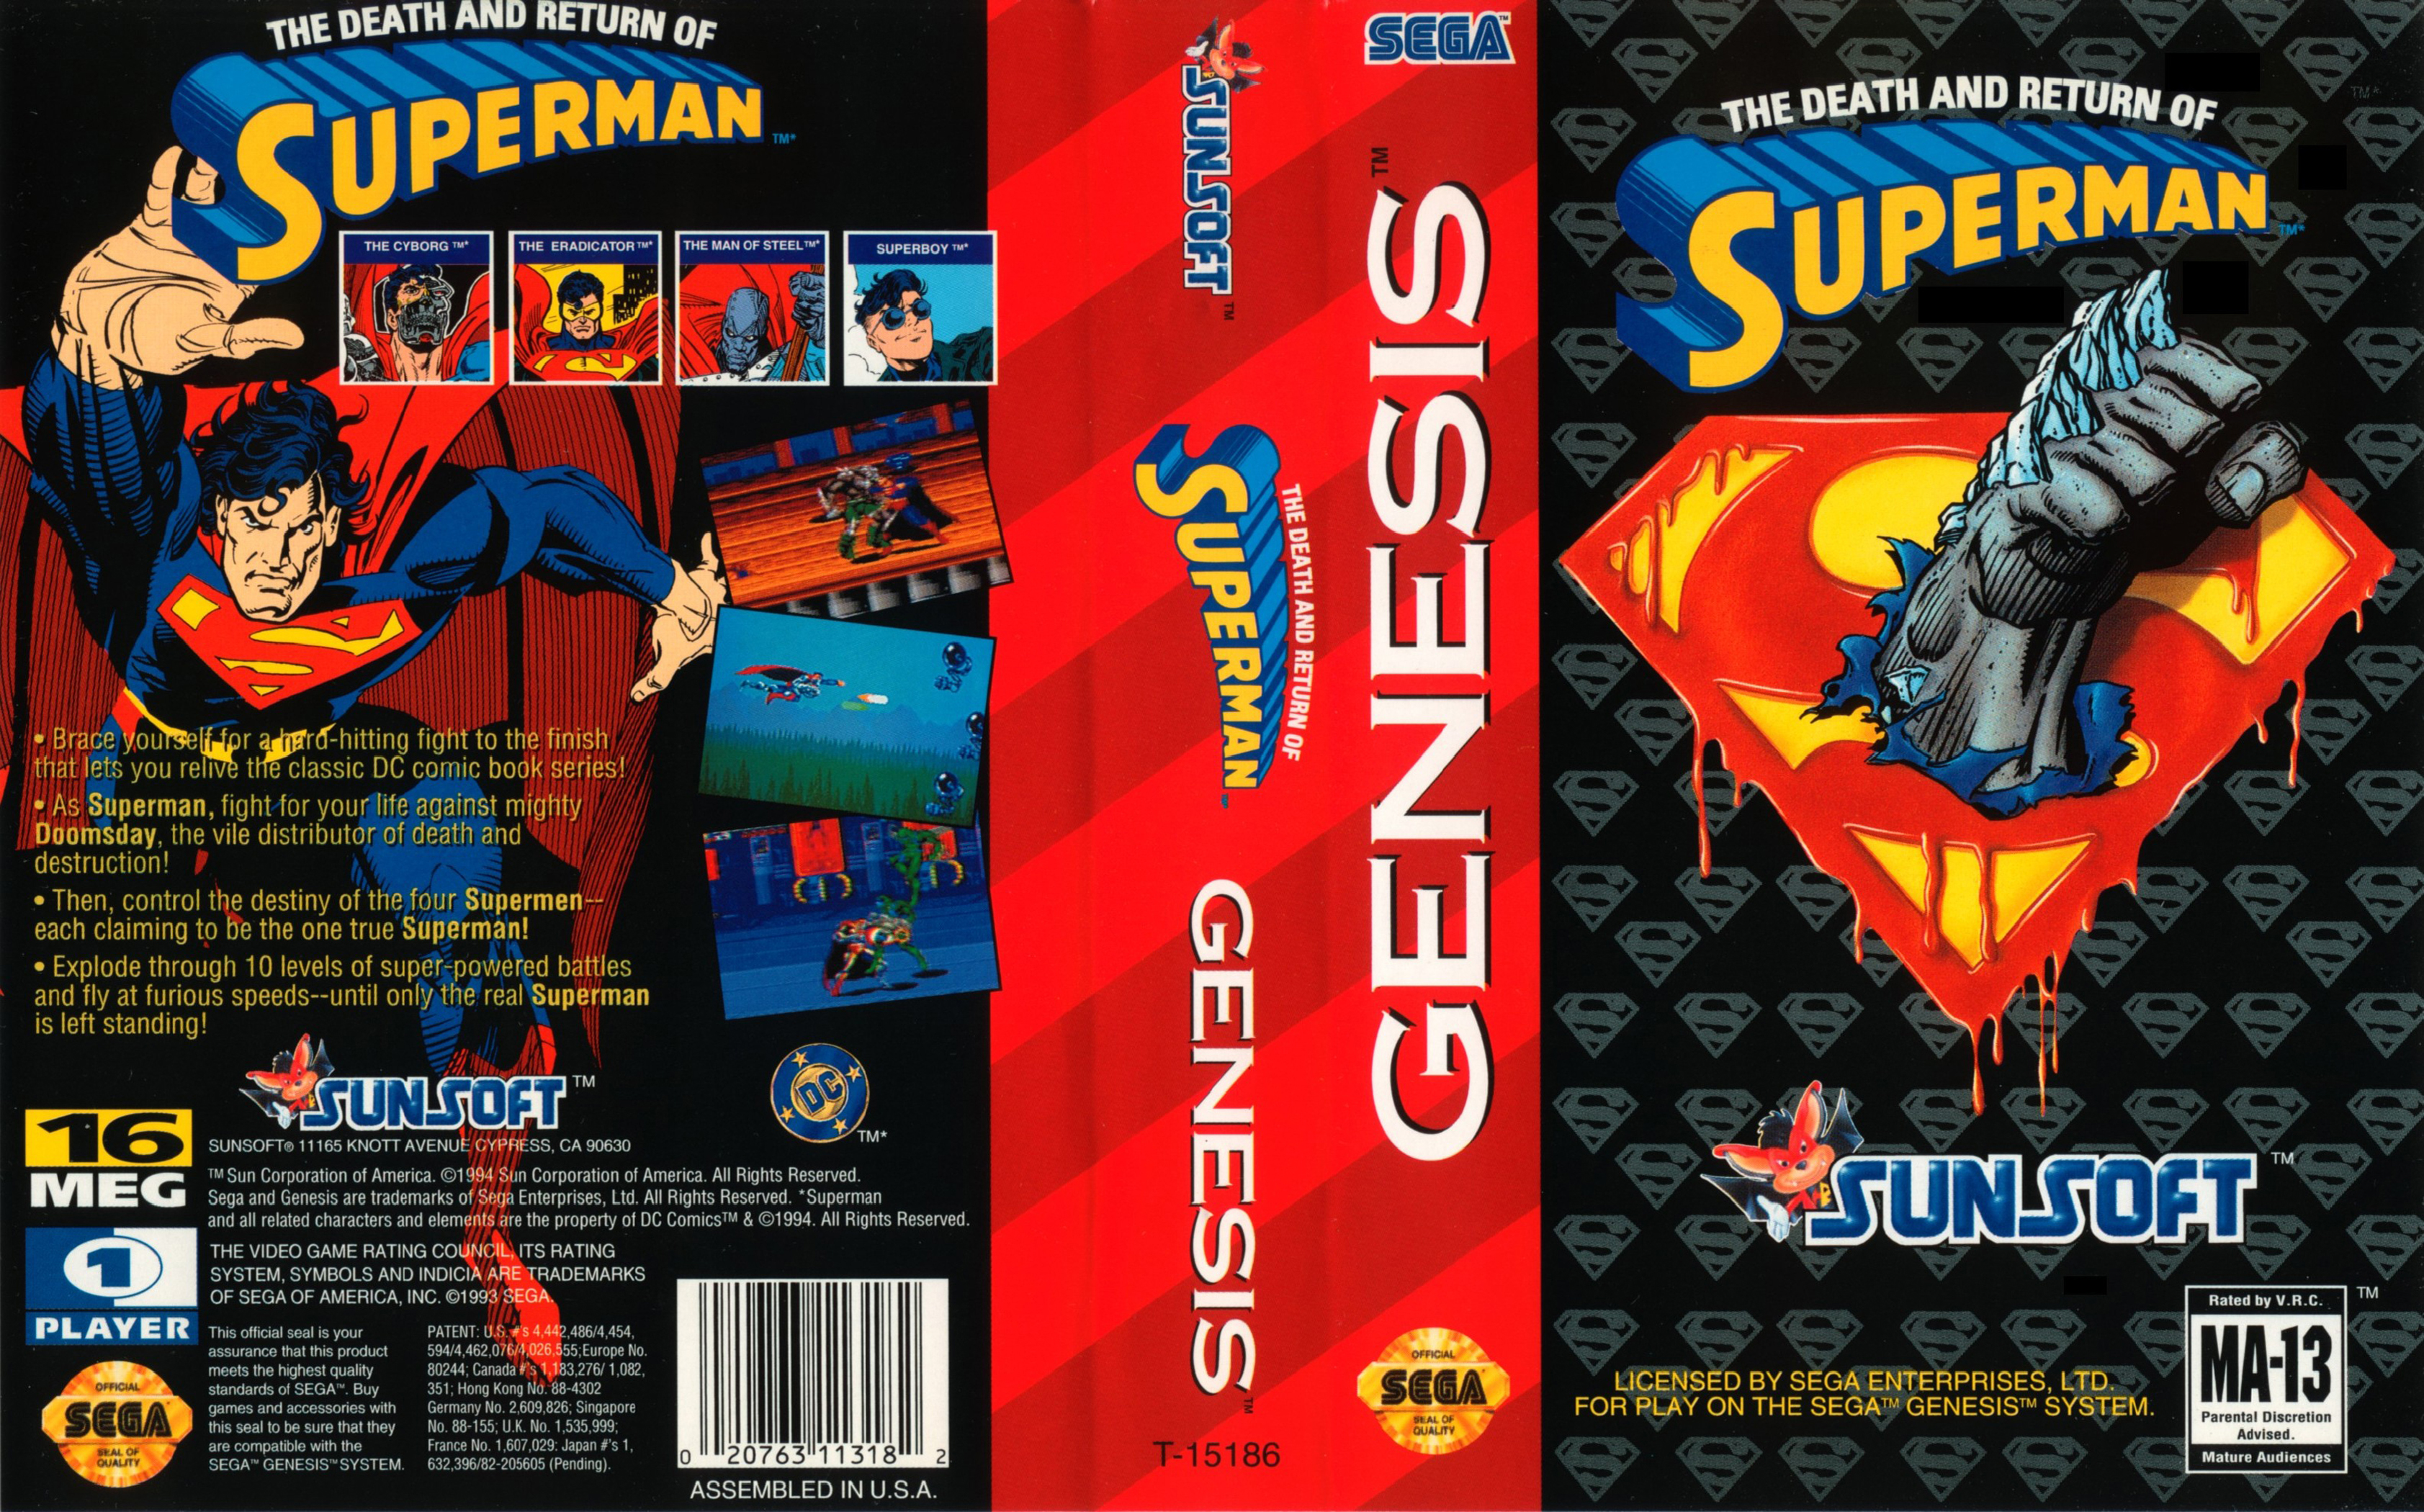 Super men games. Death and Return of Superman сега. Death and Return of Superman Genesis обложки. Death and Return of Superman Sega обложка. Superman 2 Sega.